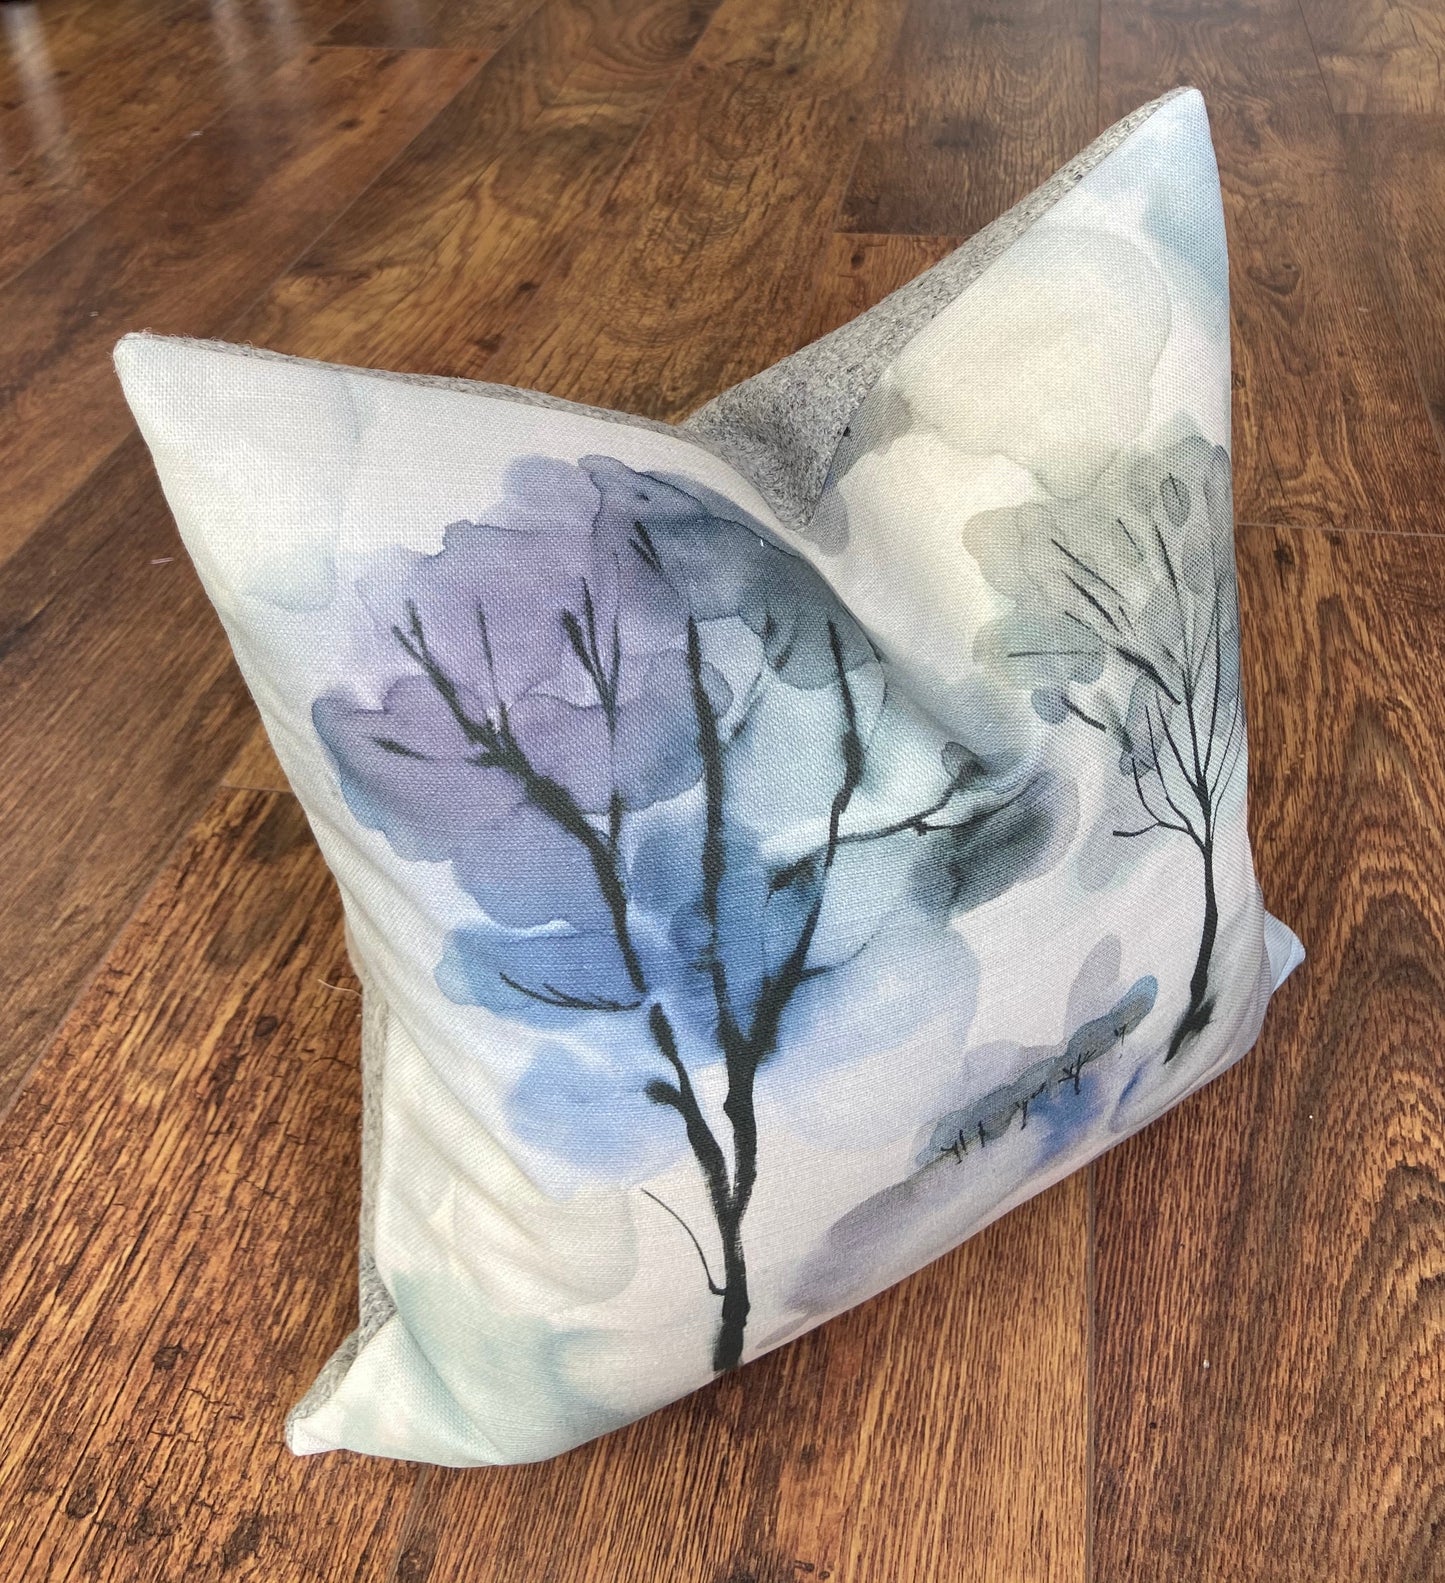 Watercolour Trees and Grey Harris Tweed Cushion, 18”